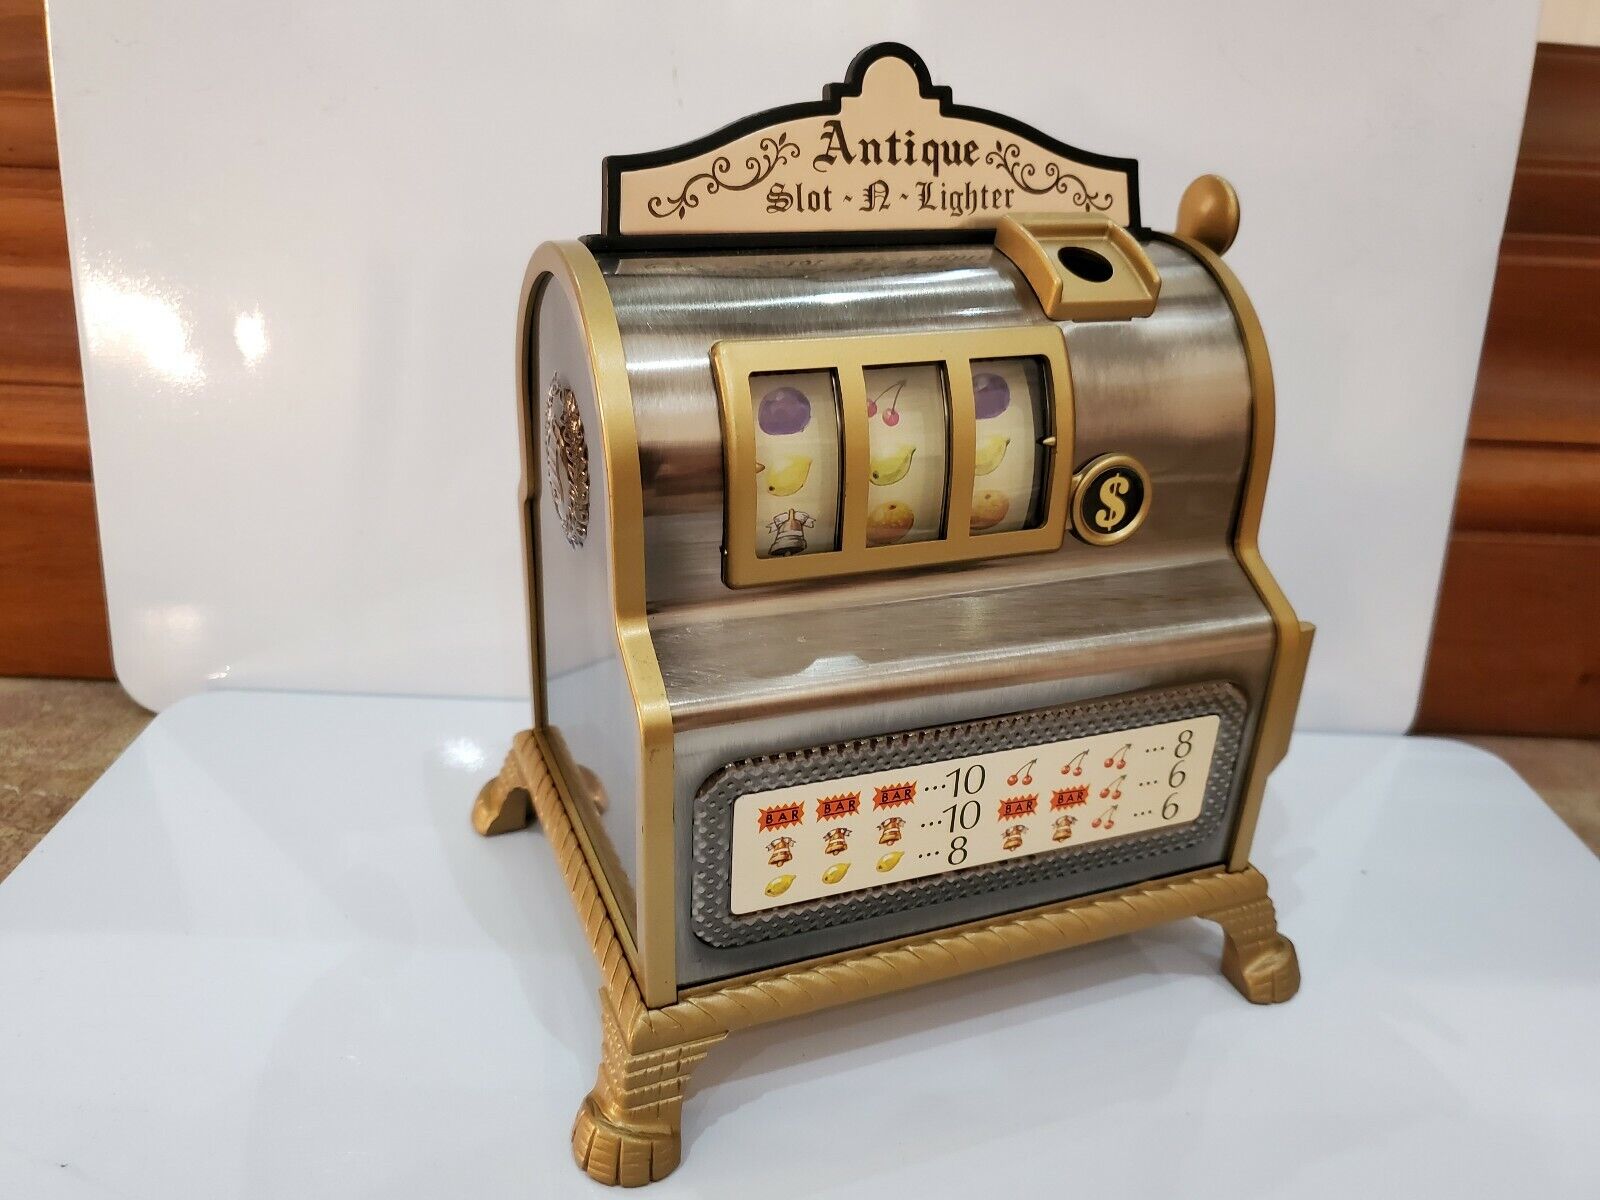 NOS Working Waco Slot Machine Antique Slot-N-Lighter Lighter, Orig. Box  1906.48